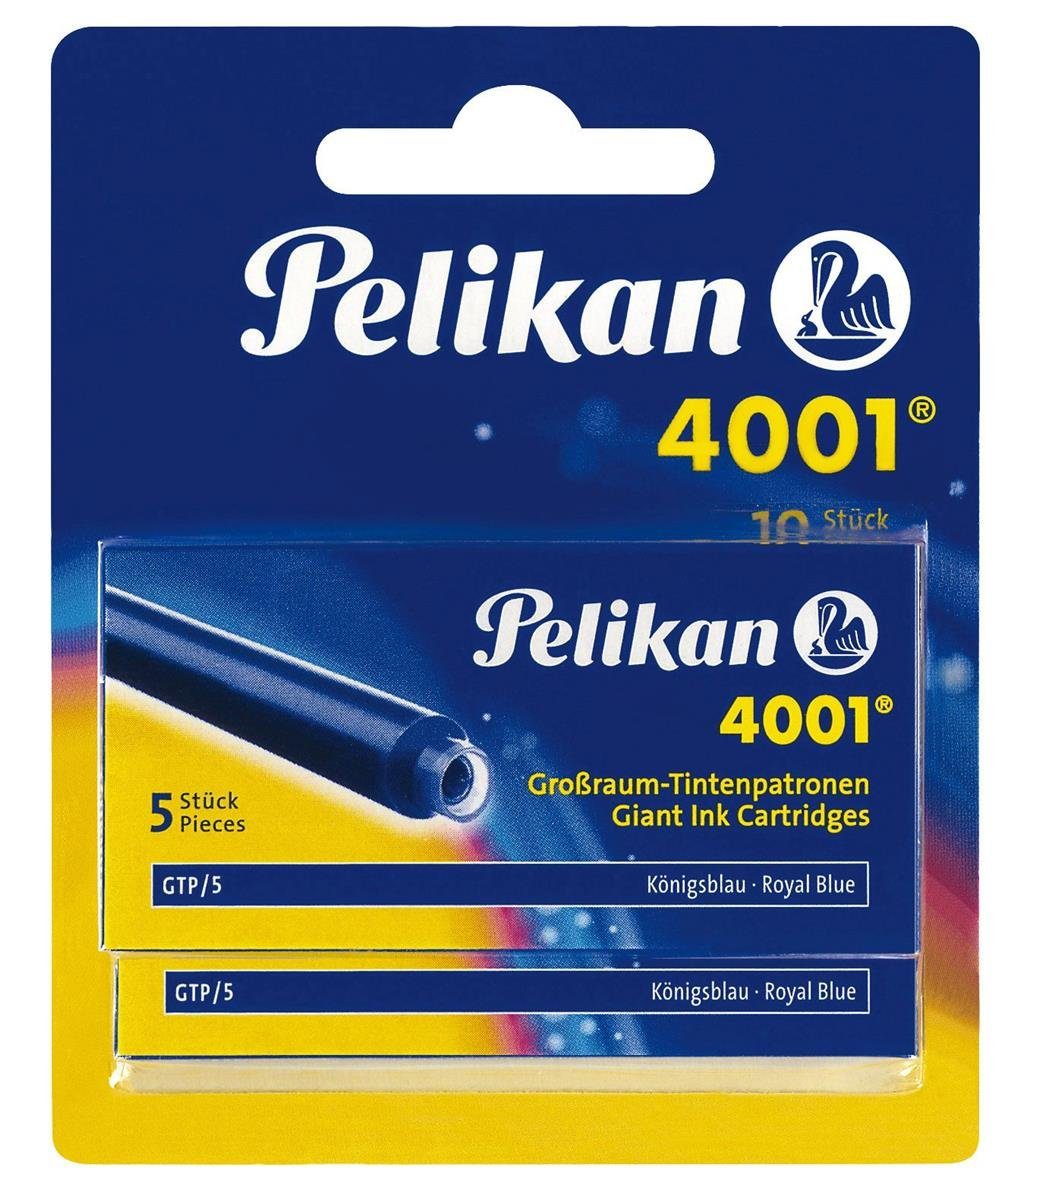 Pelikan Schreibtischunterlage Pelikan Großraum-Tintenpatronen 4001 GTP/5/2/B